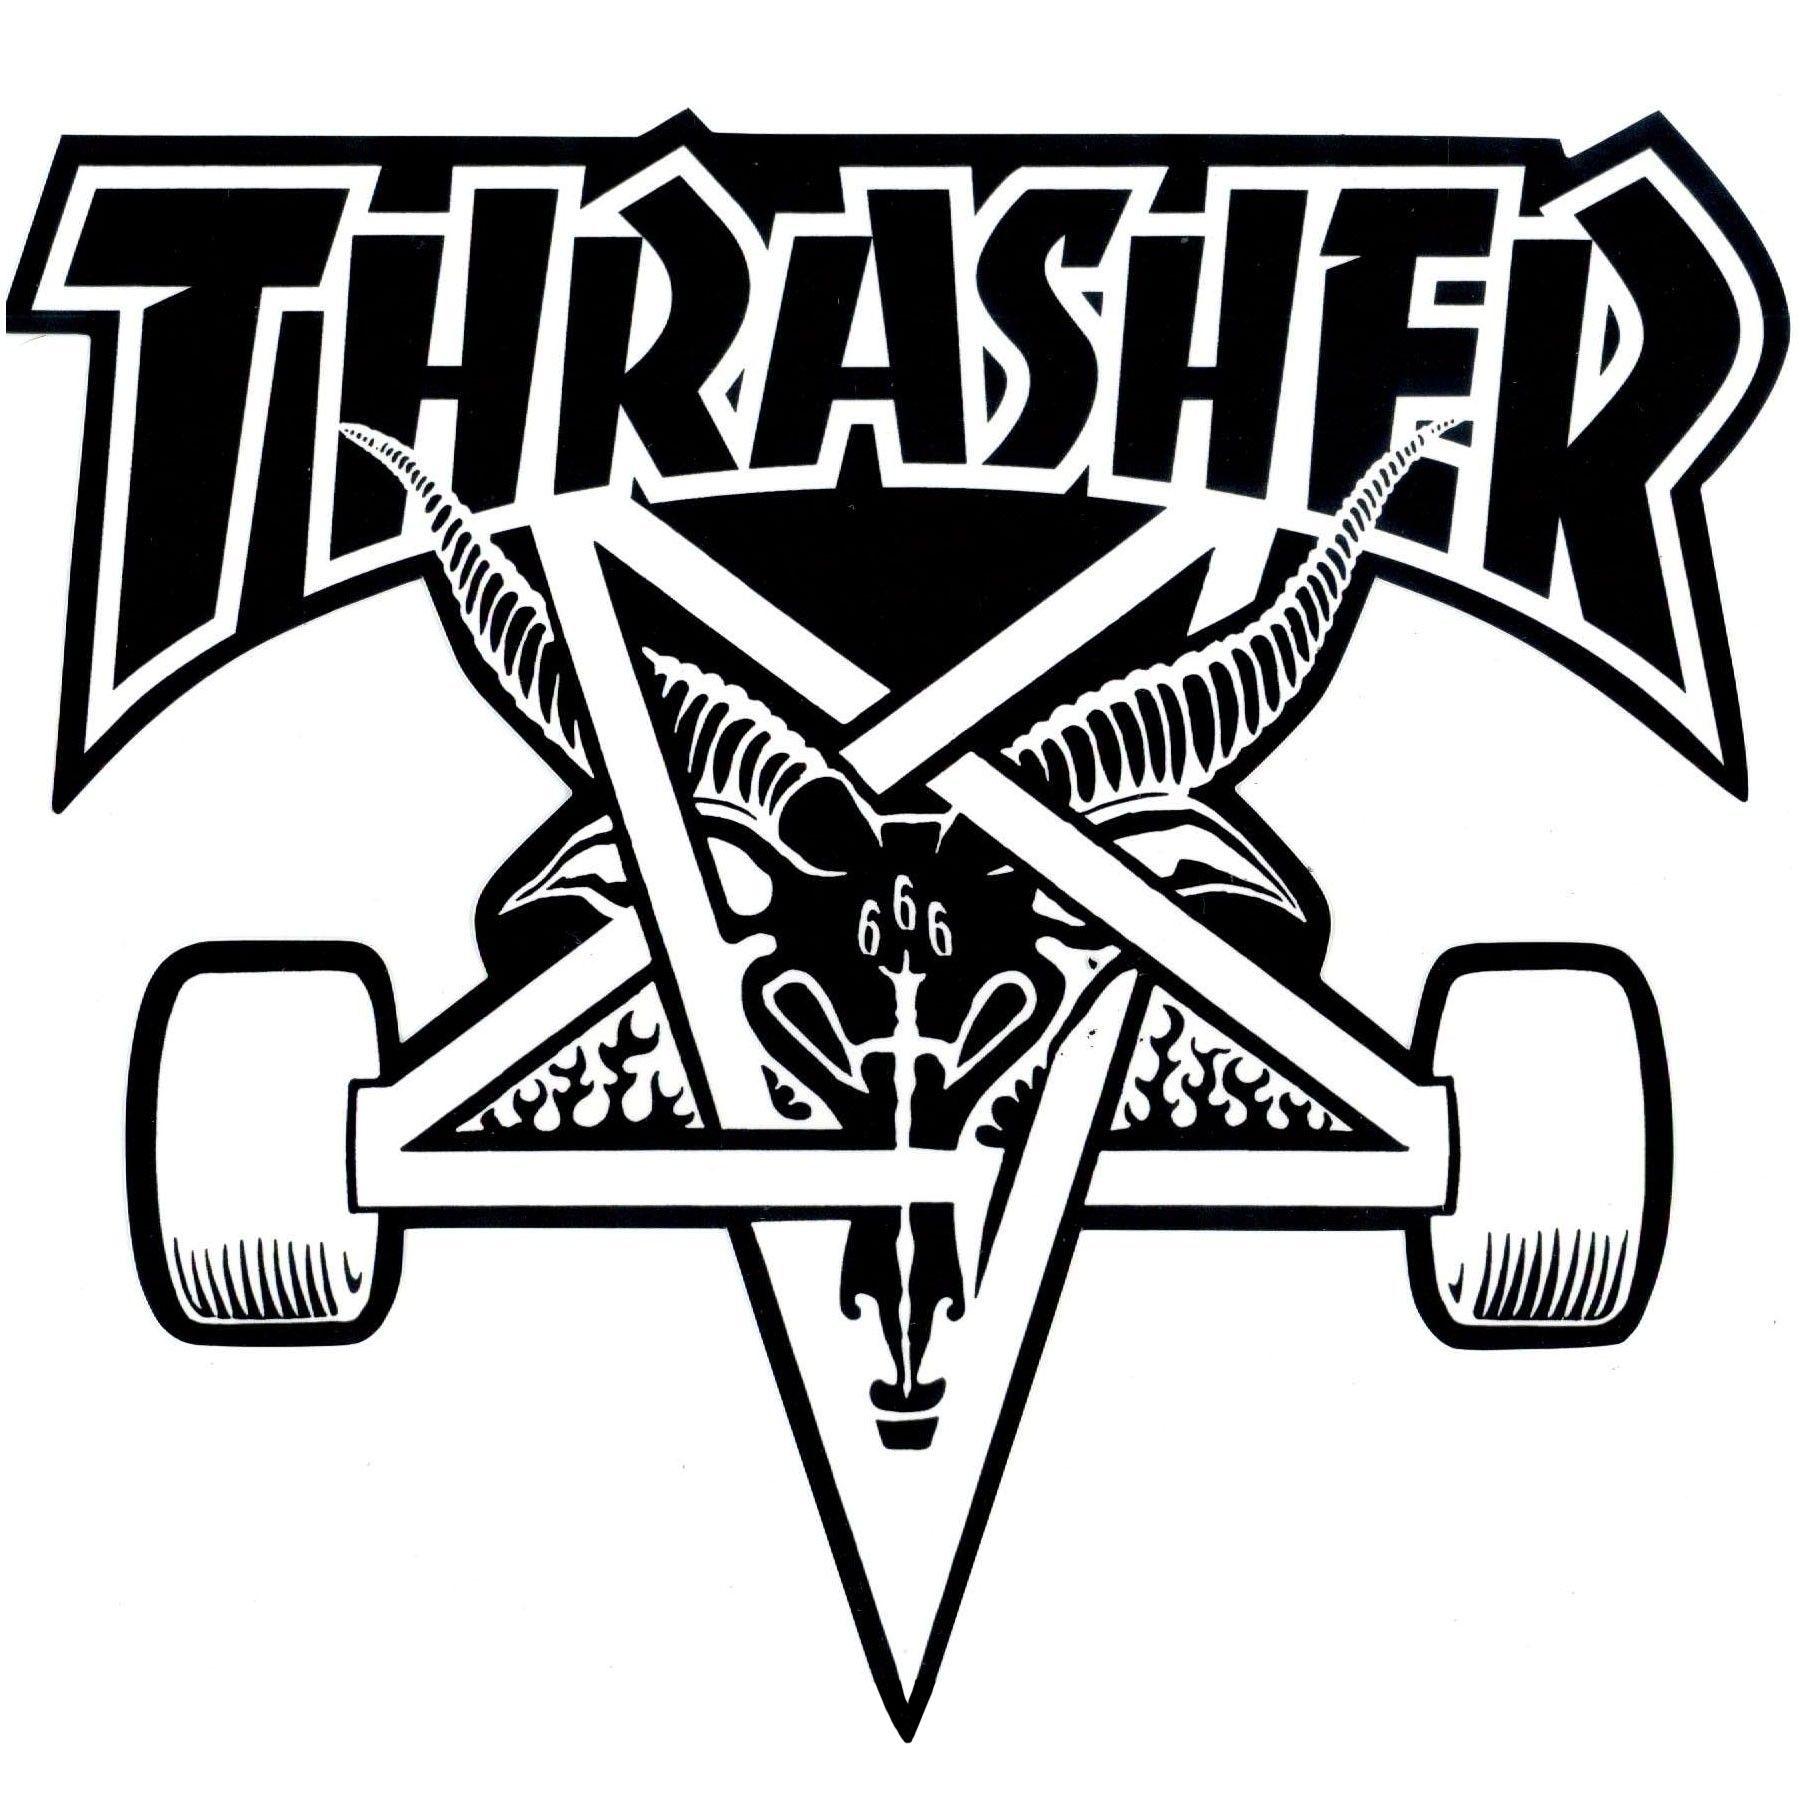 Skeleton Thrasher Logo - 10 Skateboarder drawing logo for free download on Ayoqq.org